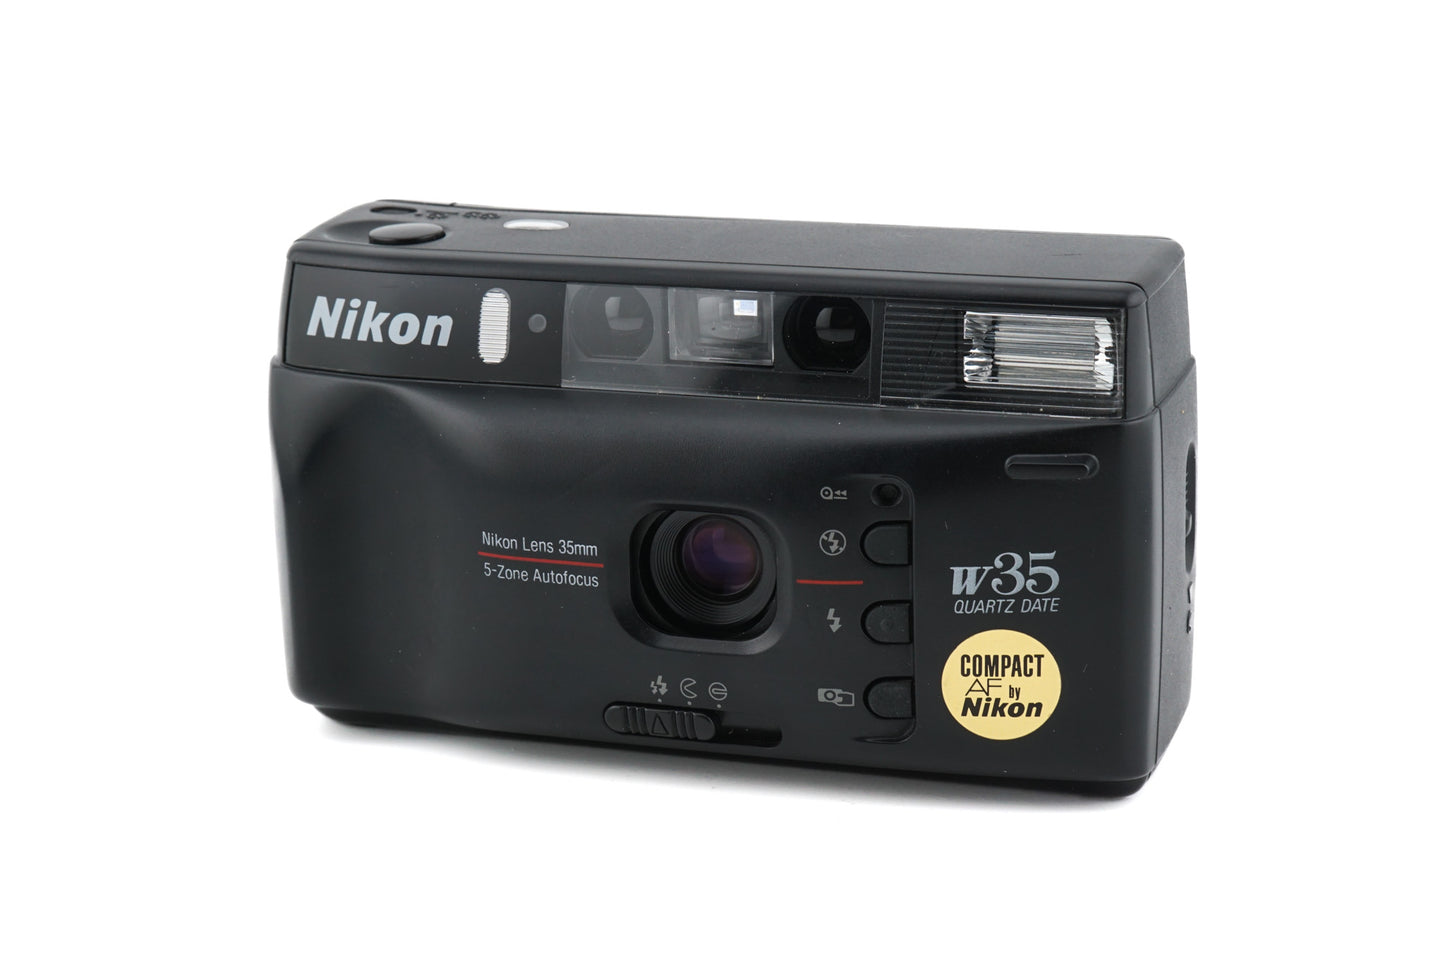 Nikon W35 Quartz Date